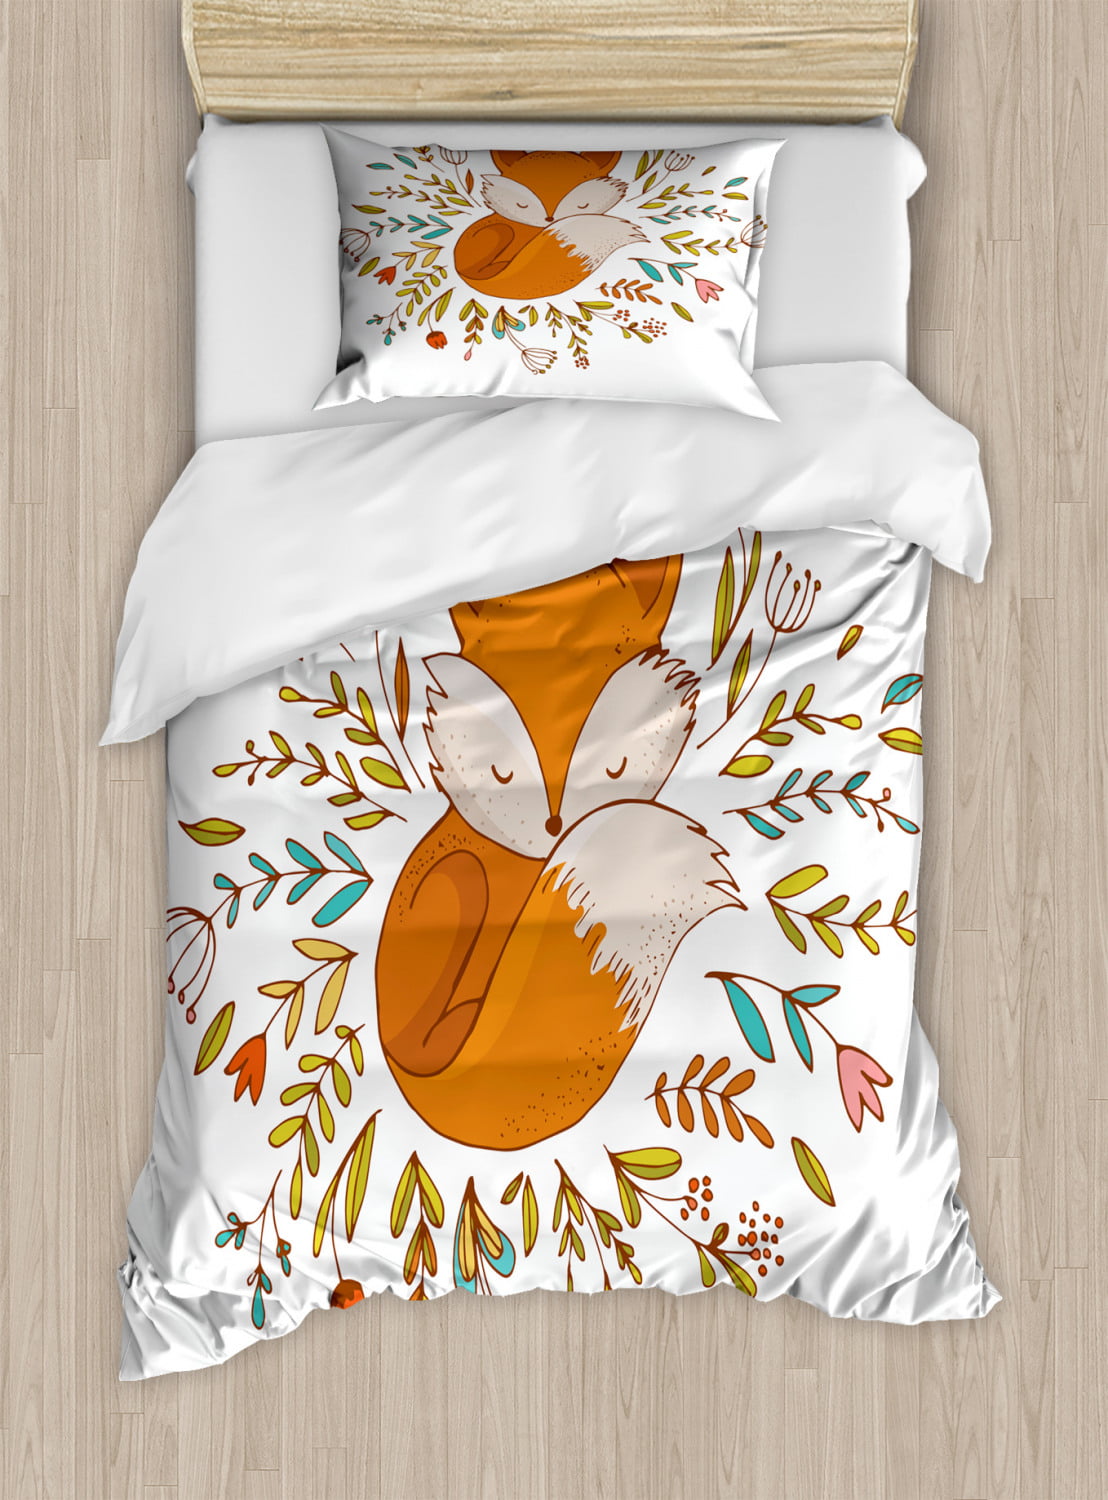 Supreme Bedding Sets Us/europe/uk Size Quilt Cartoon Bed Cover